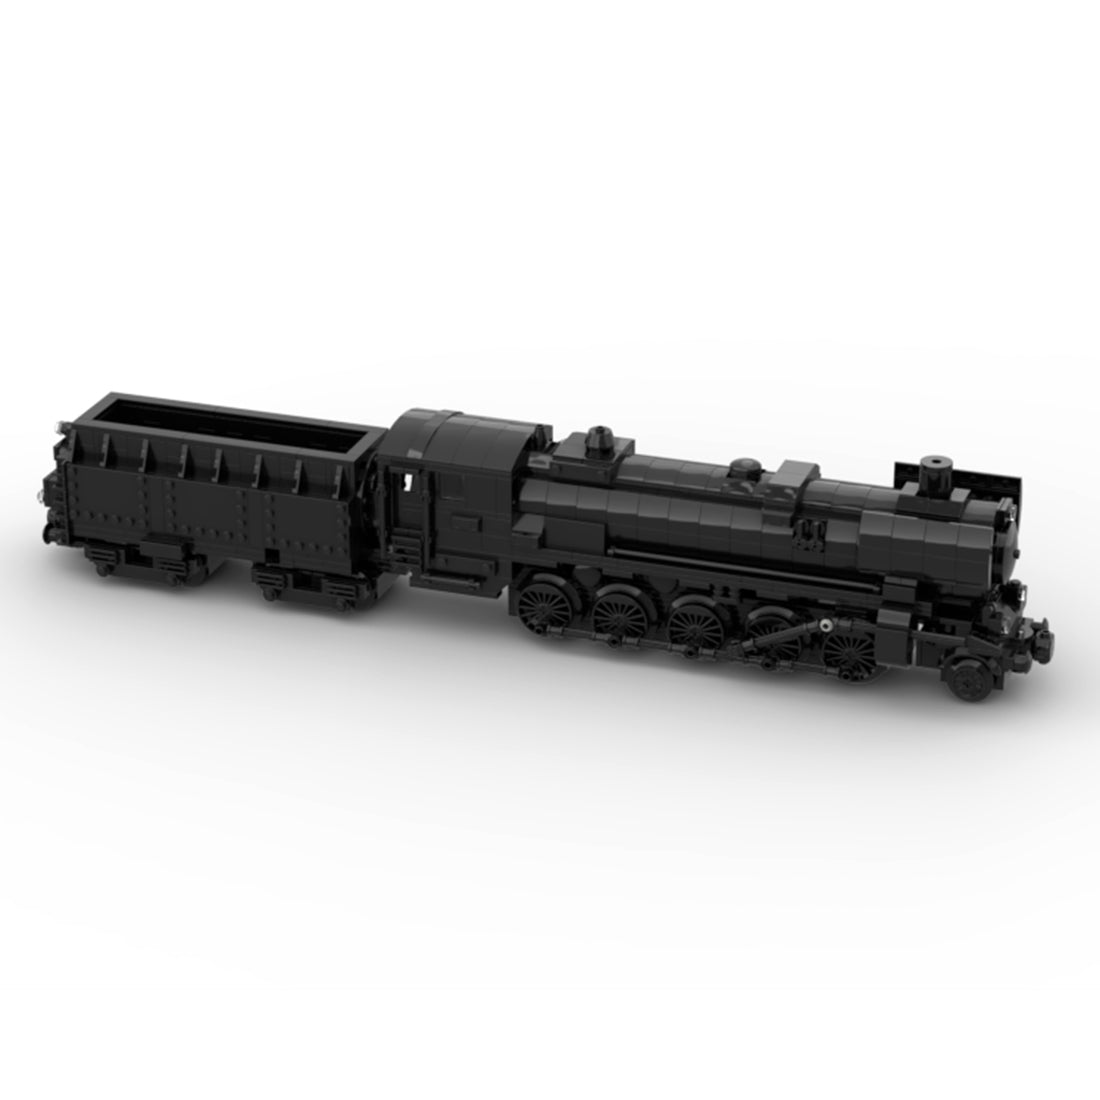 MOC-126447 Military Train Locomotive Model